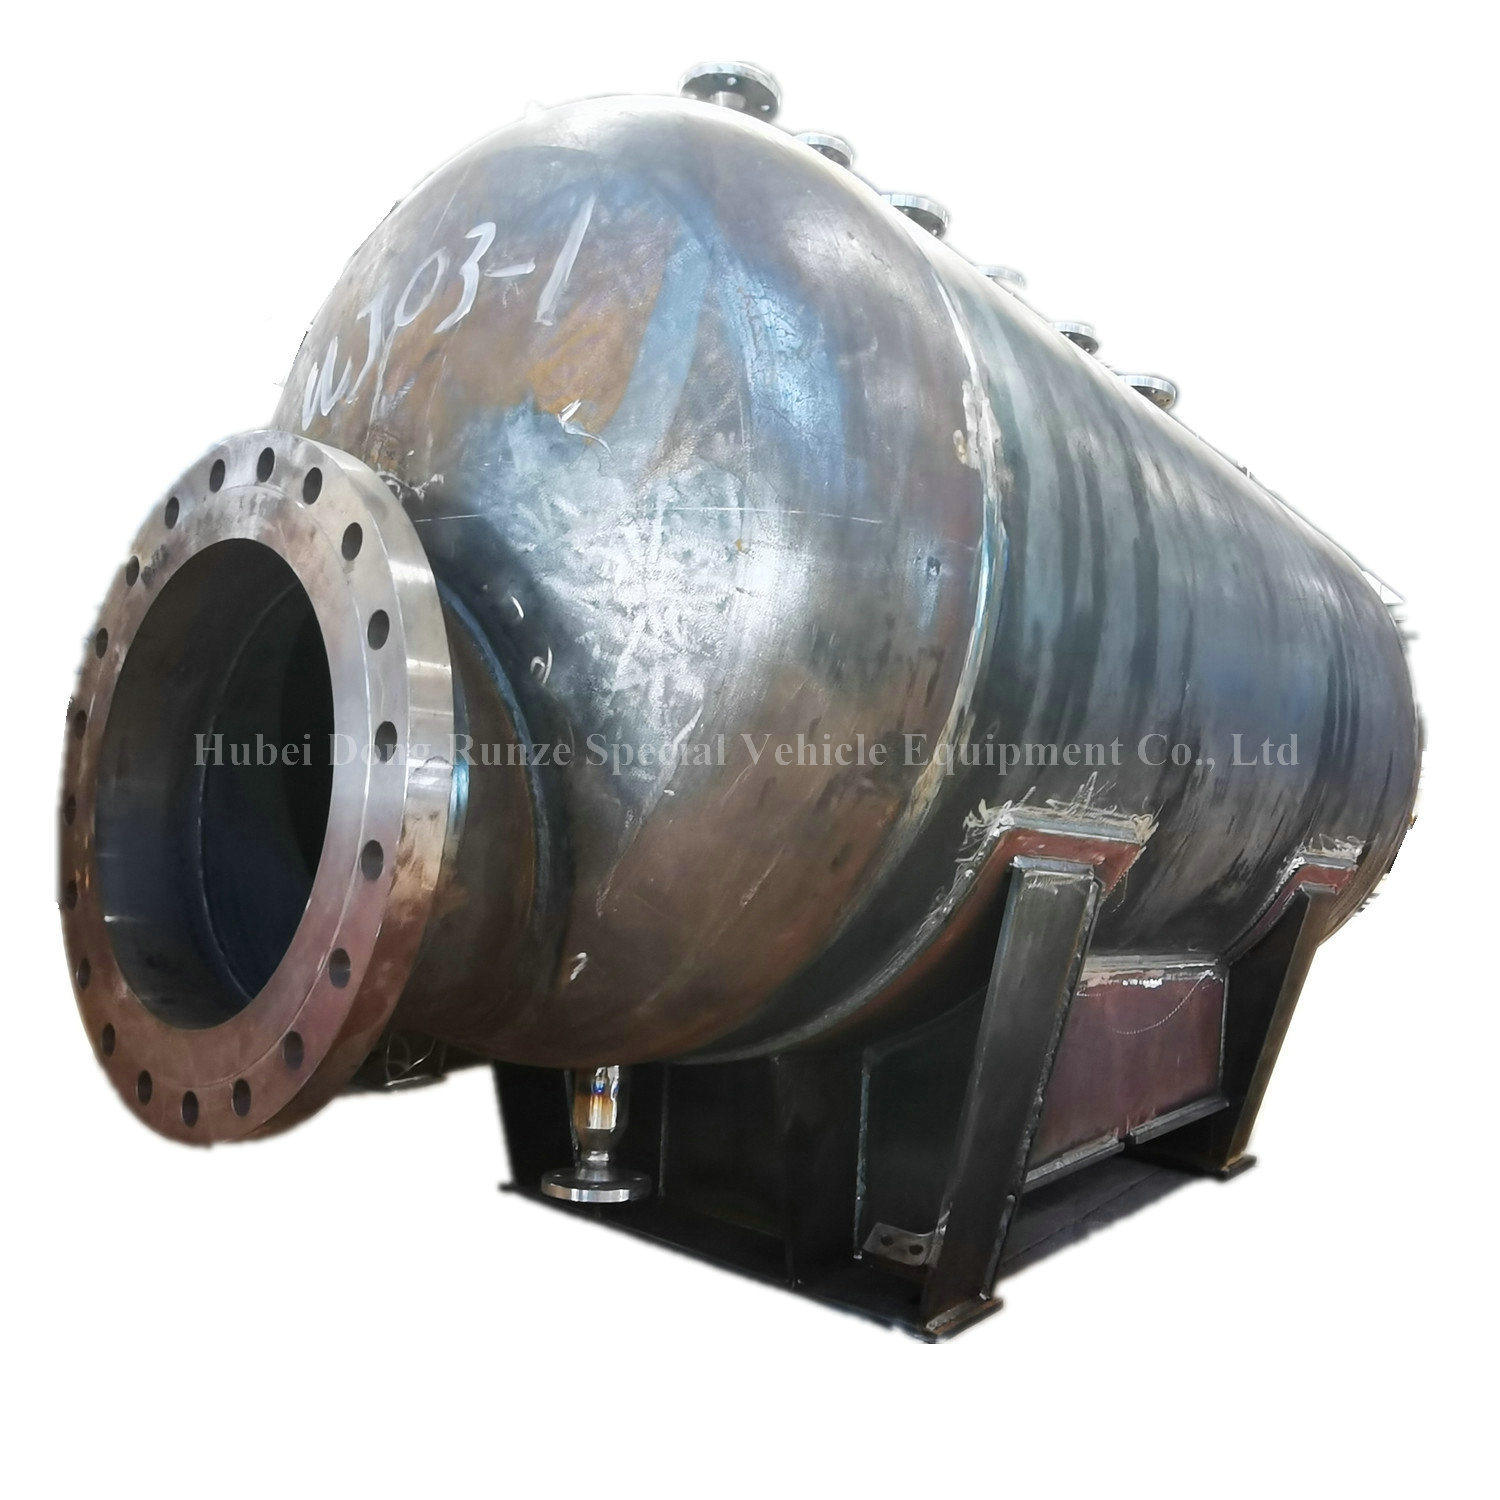 Customizing 1-3 T Portable Transportable Tank for Sotrage LPG Liquid Gas Propane Ammonia Dem, Isobutane, Cooking Gas 